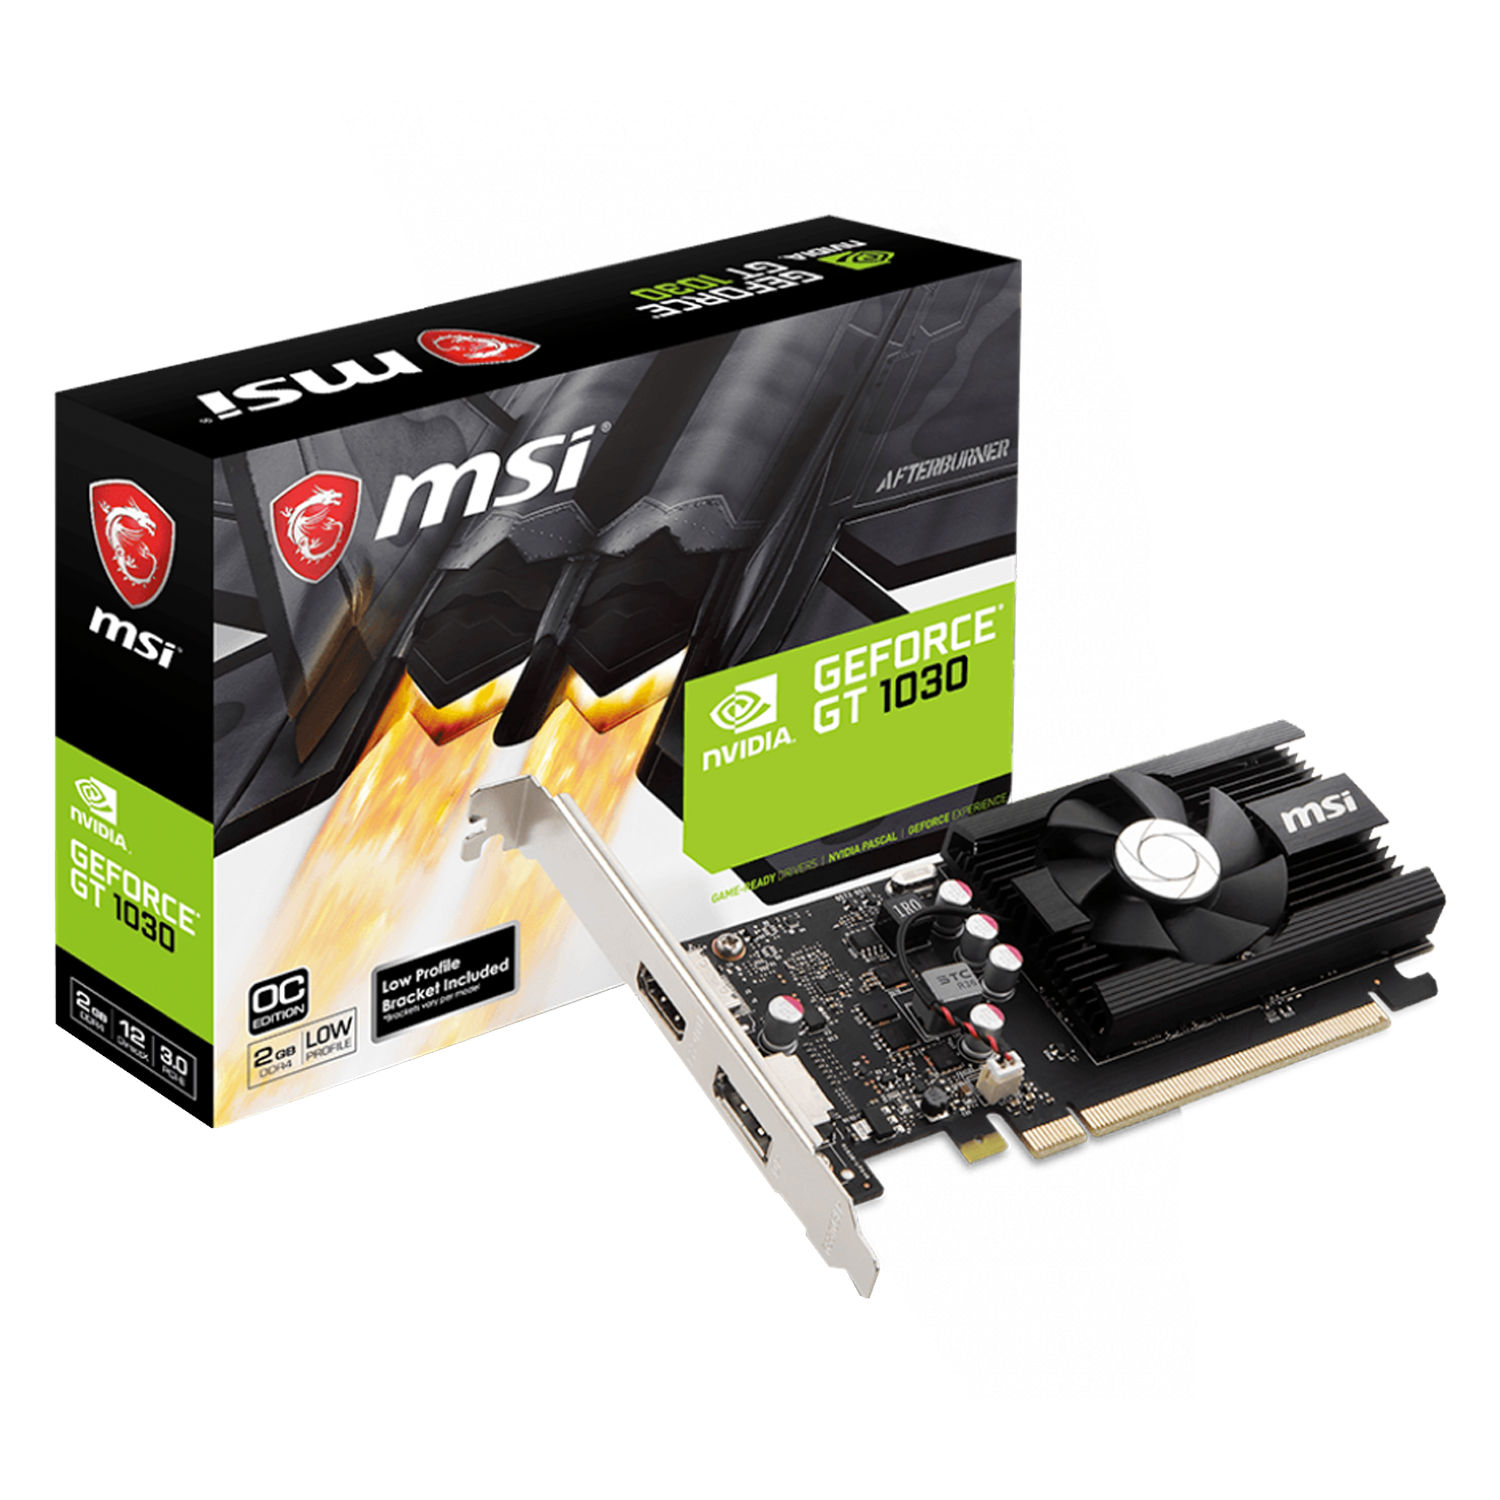 Placa de Vídeo MSI Low Profile OC NVIDIA GeForce GT 1030 2GB DDR4 - 912-V809-4065